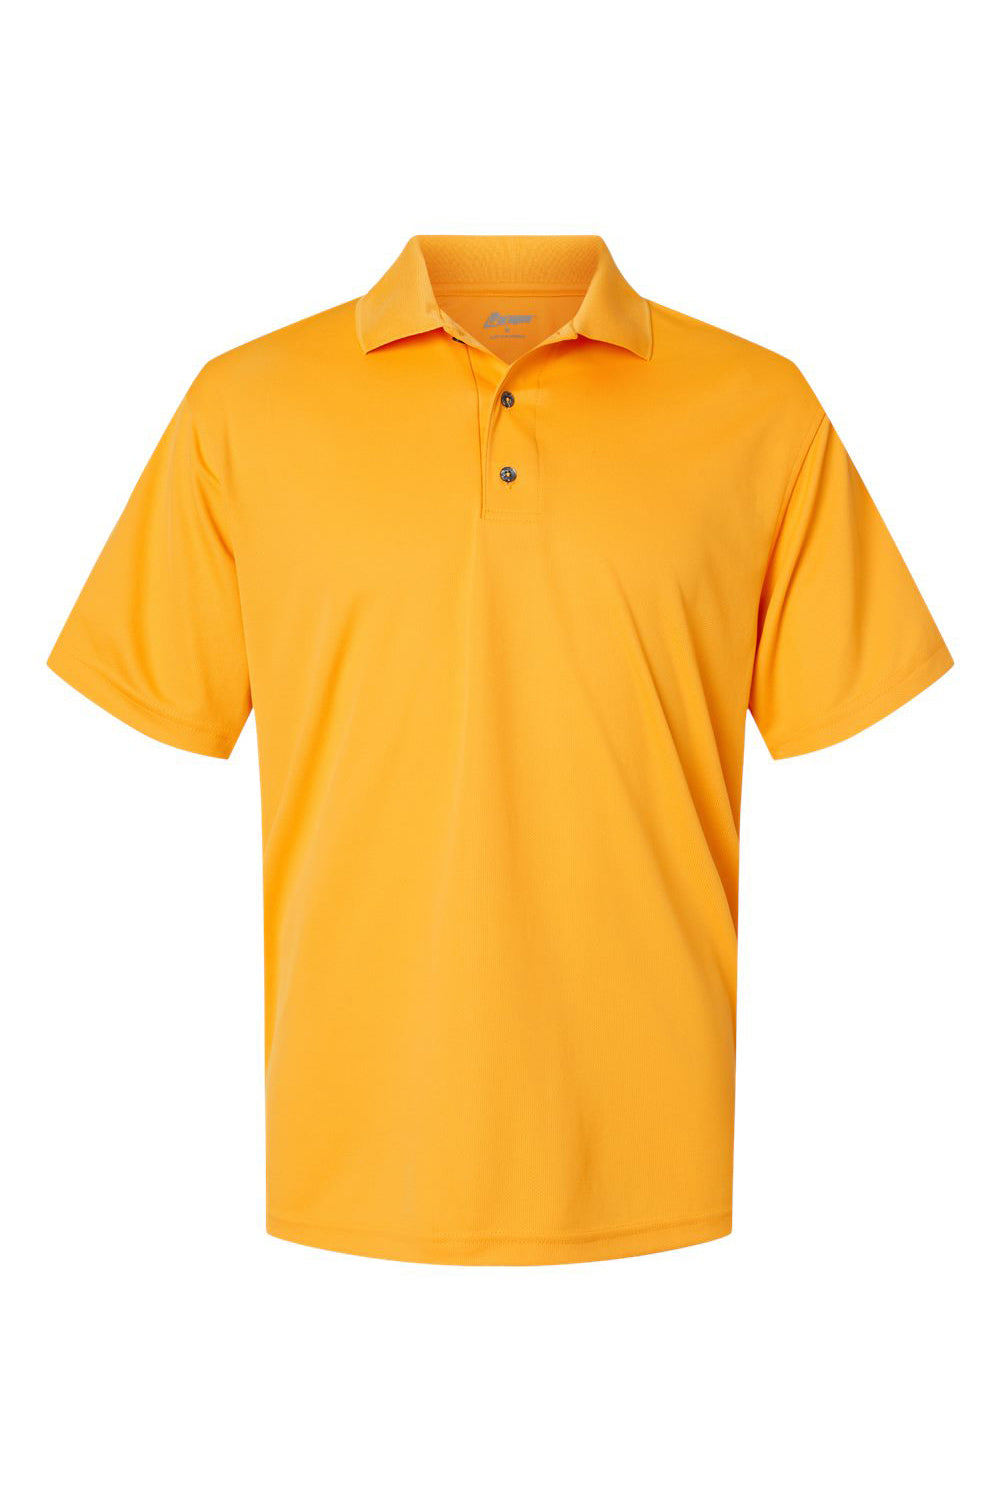 Paragon 100 Mens Saratoga Performance Mini Mesh Short Sleeve Polo Shirt Gold Flat Front